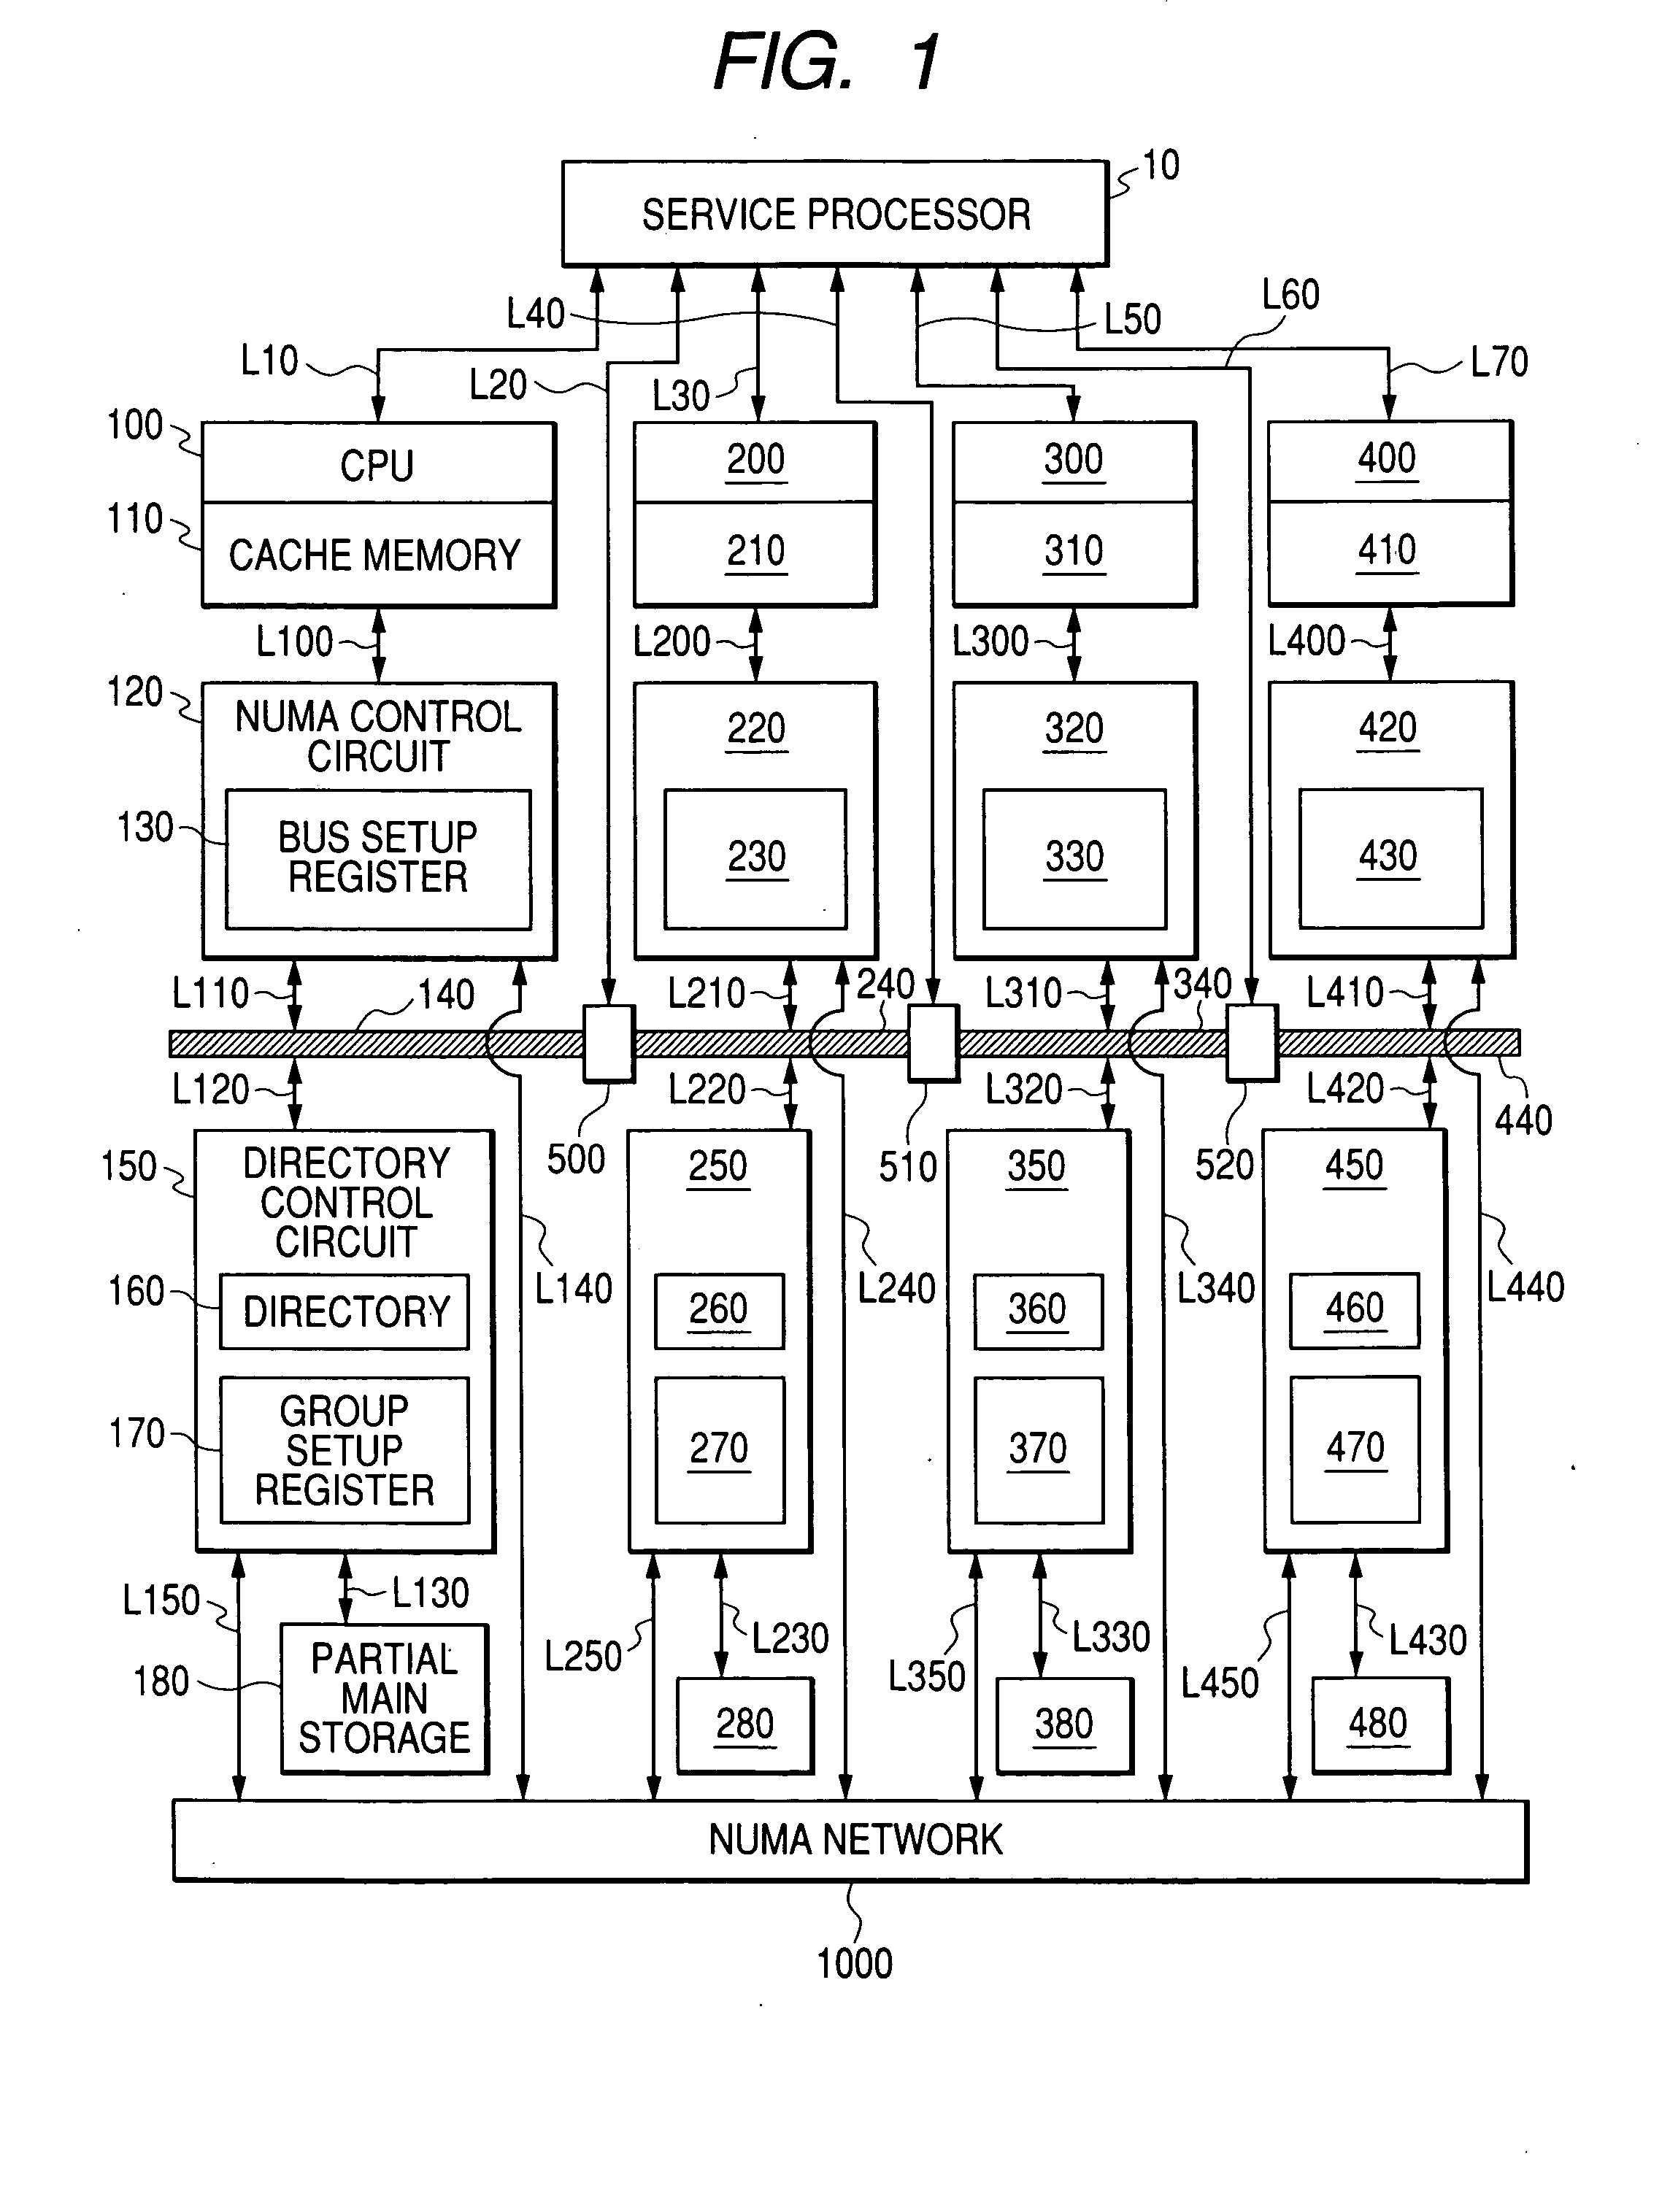 Multiprocessor system